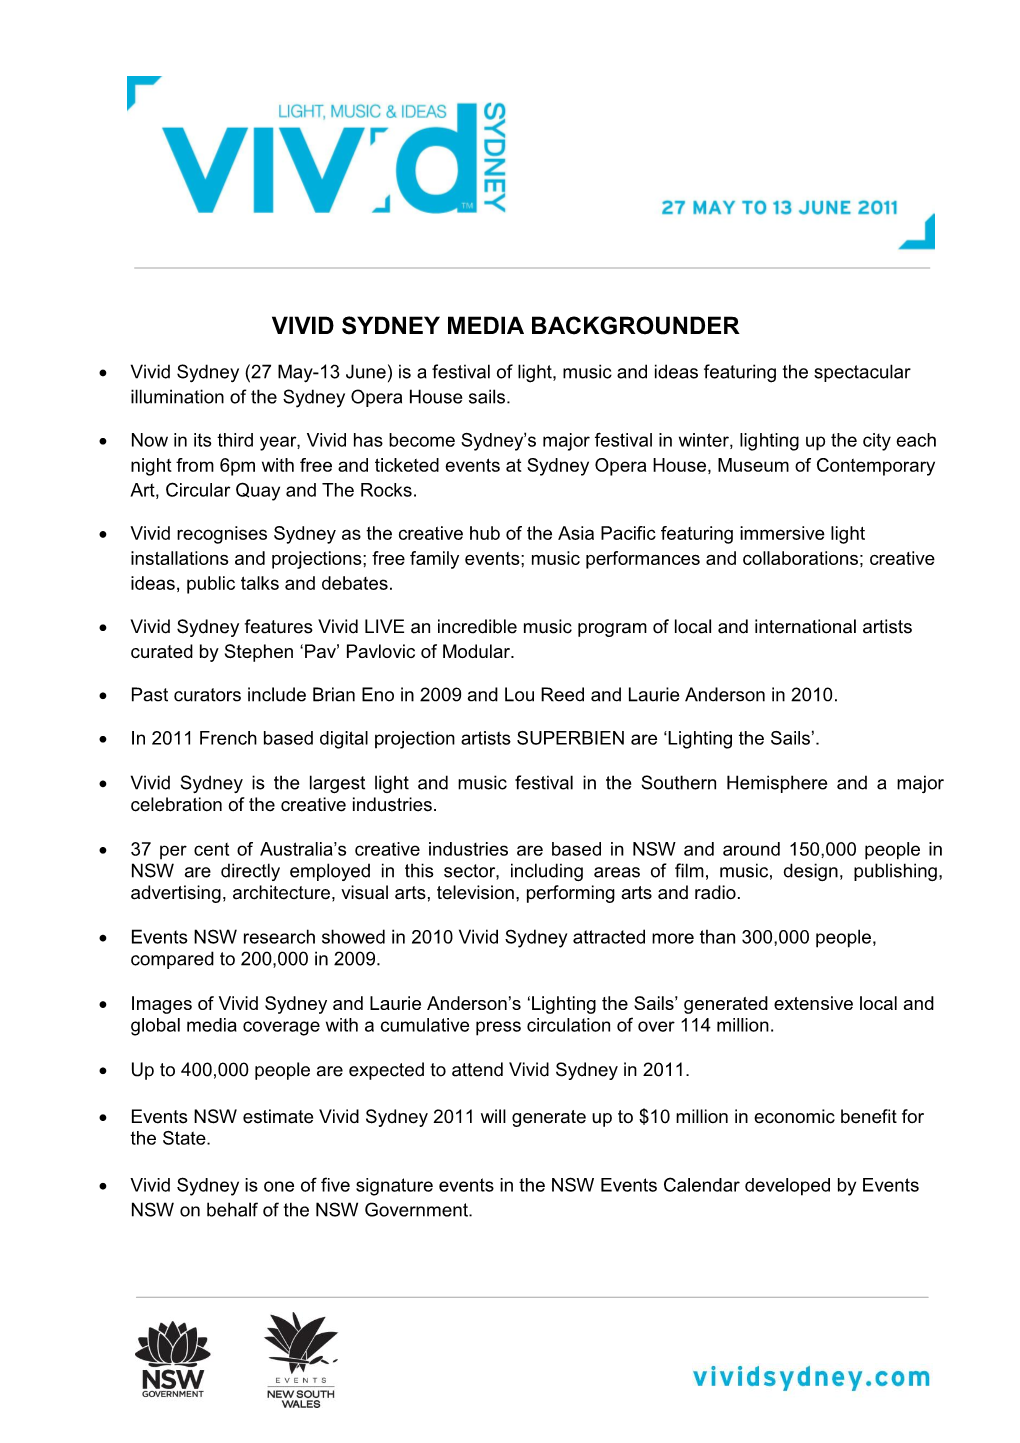 Vivid Sydney Media Backgrounder